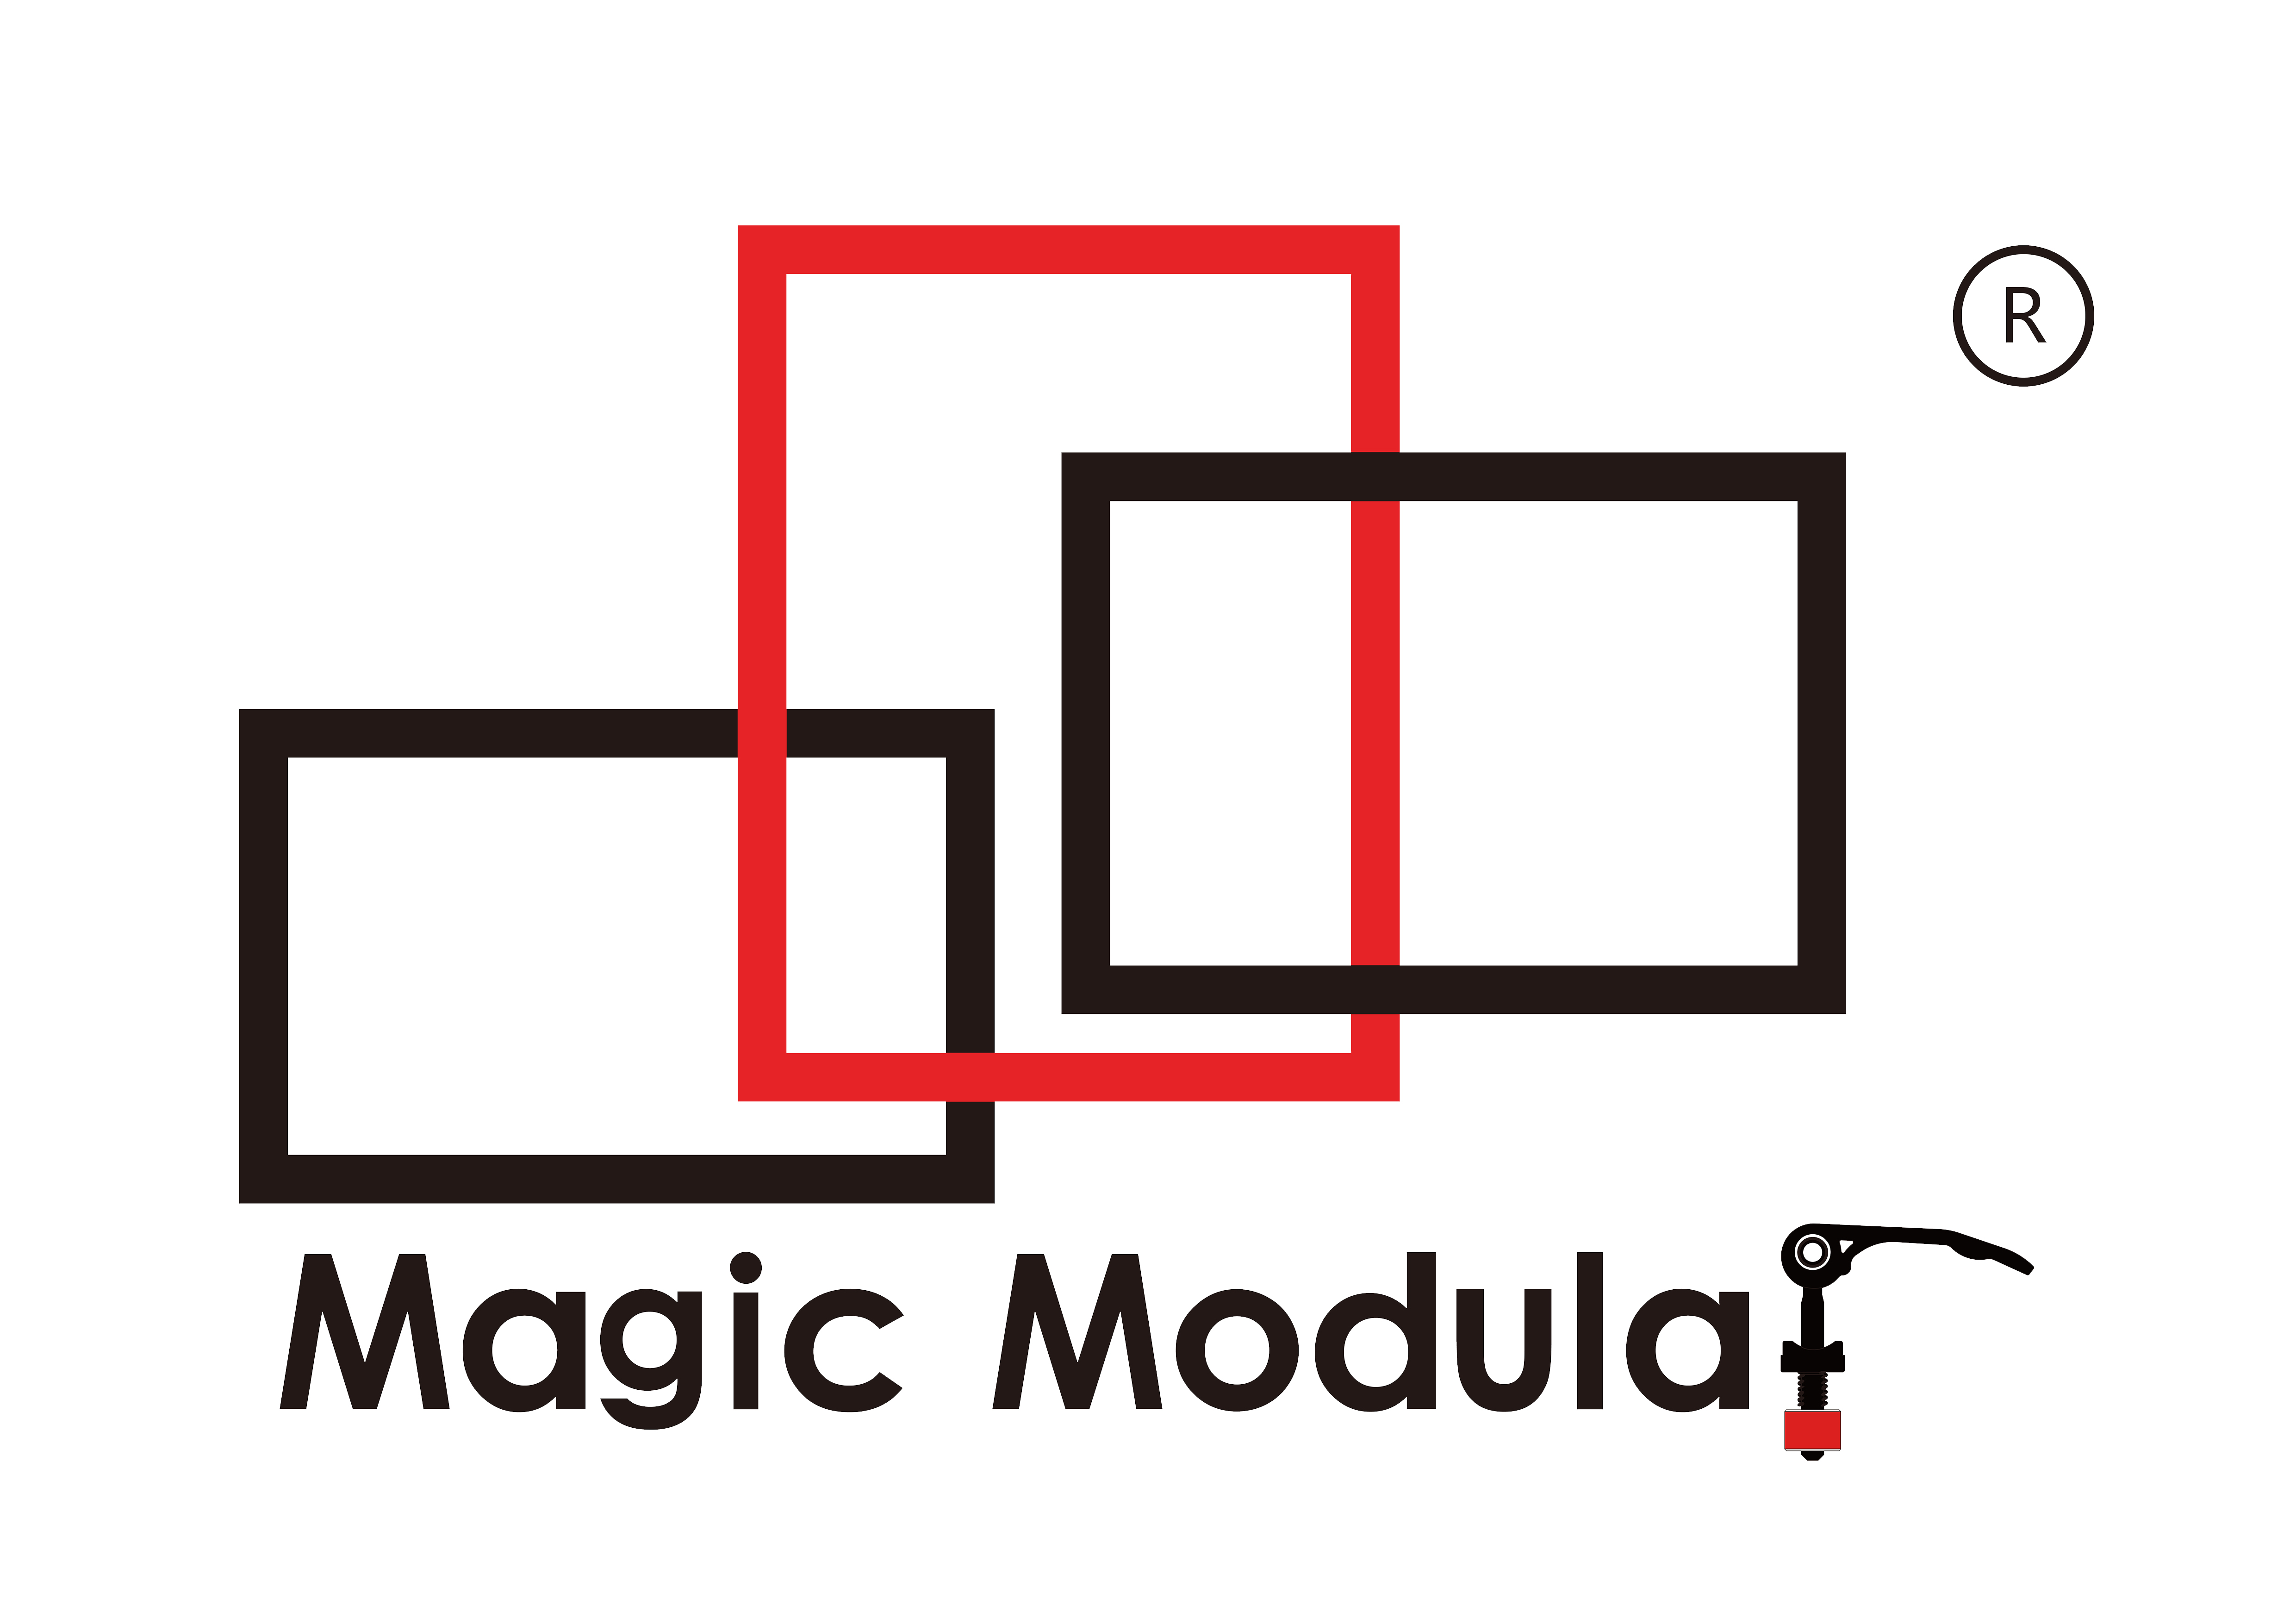 Magic Modular